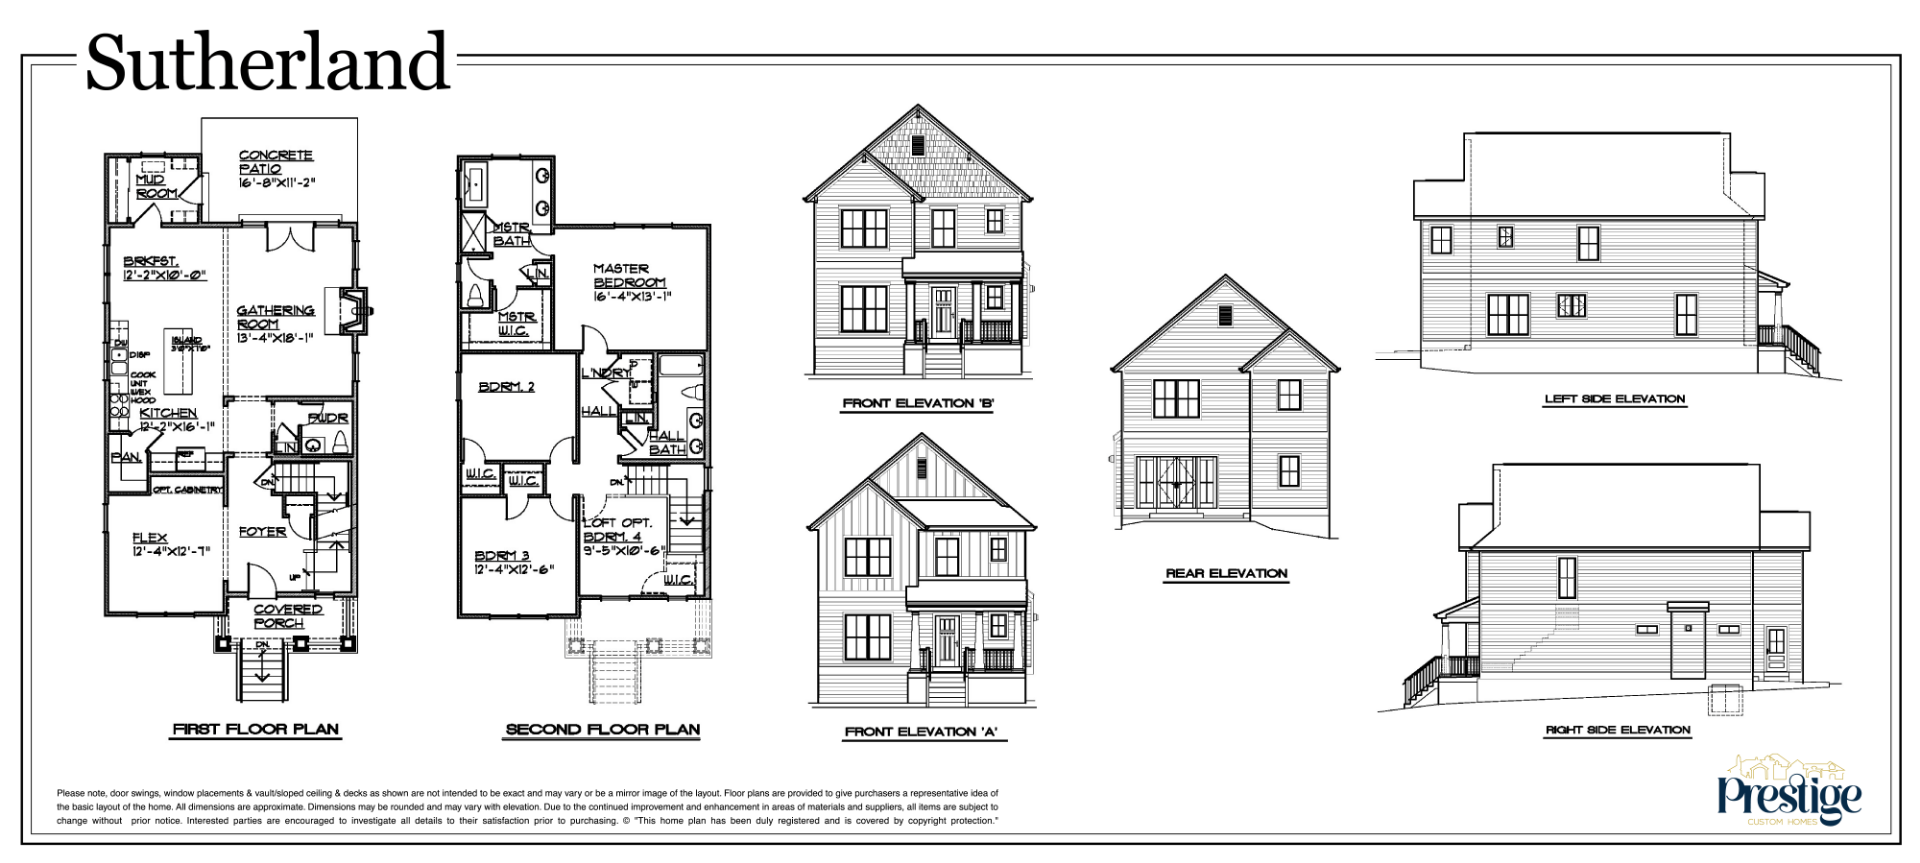 sutherland-floor-plan-prestige-custom-homes-2024 (1)